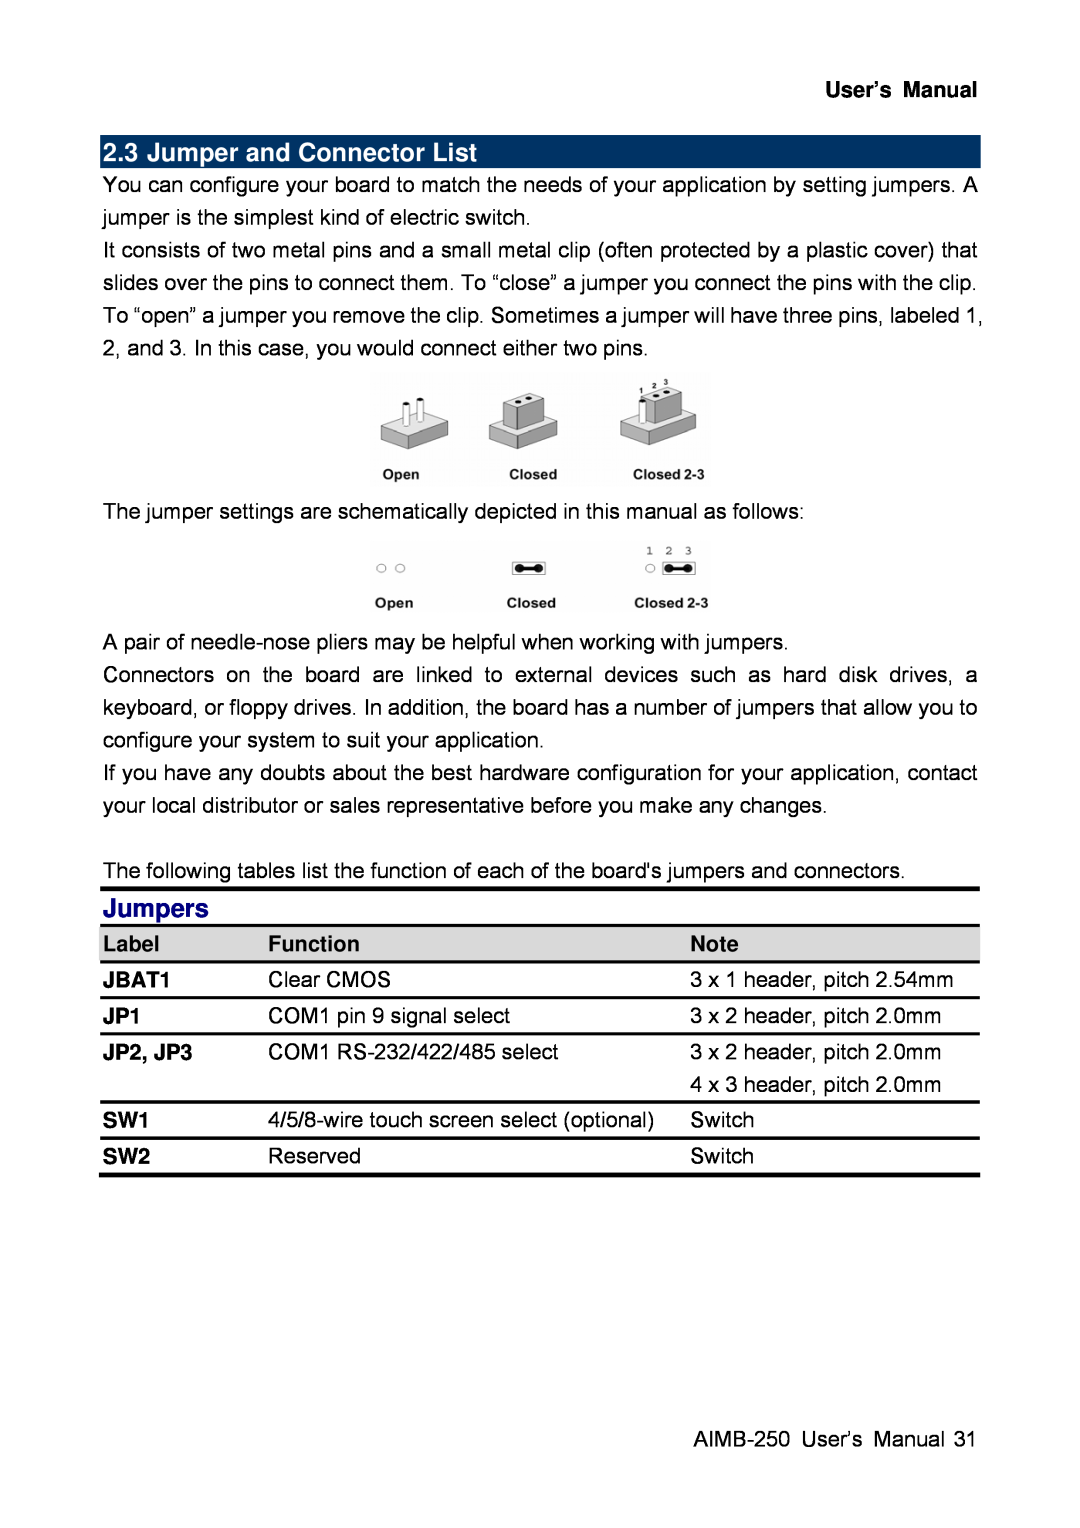 Advantech AIMB-250 user manual Jumper and Connector List, Jumpers, Label, Function, JBAT1, JP2, JP3, User’s Manual 